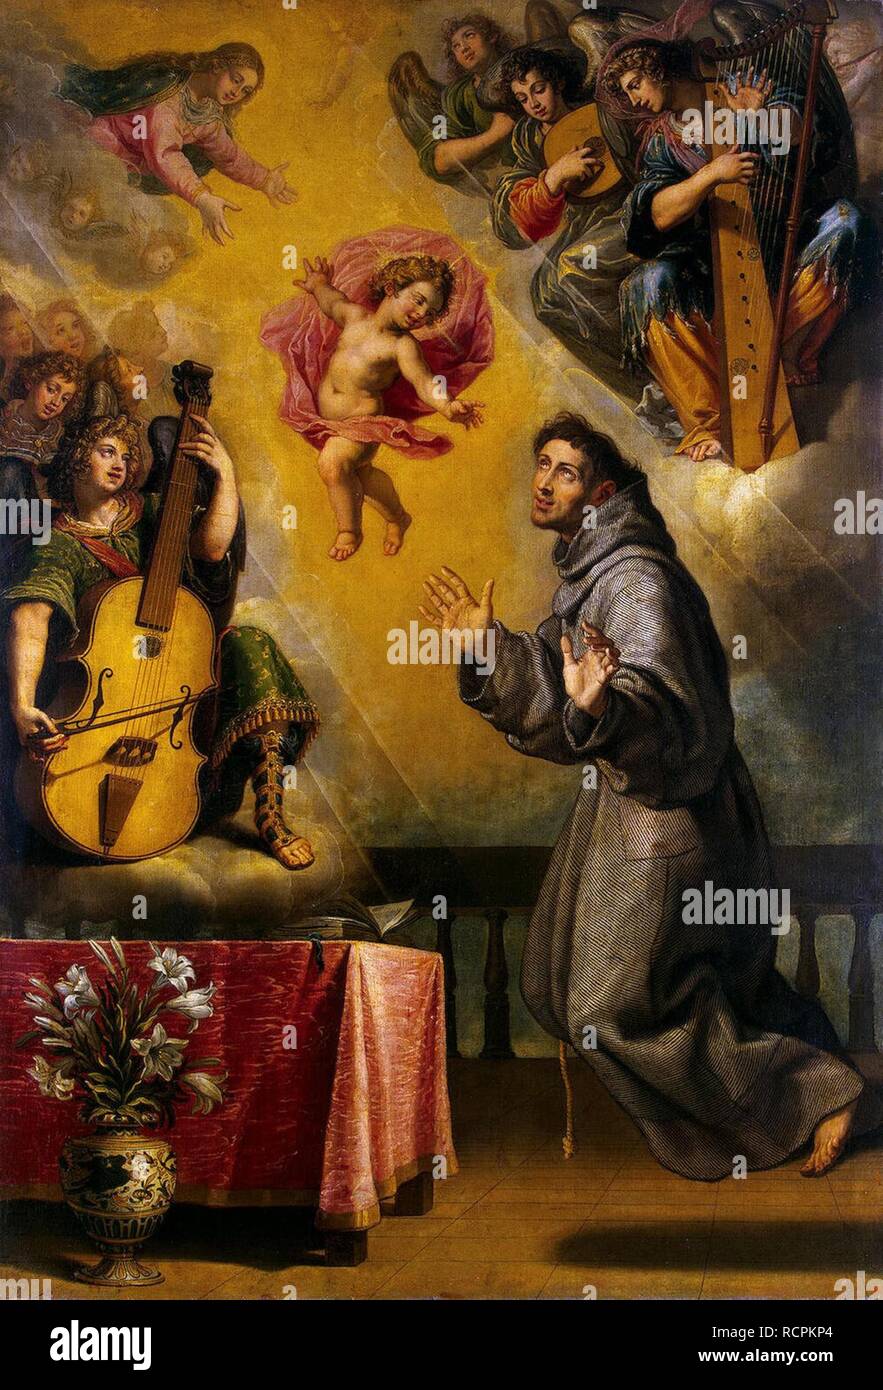 Vision des hl. Antonius von Padua. Museum: Staatliche Eremitage, St. Petersburg. Autor: Carducho (Carducci), Vincente. Stockfoto